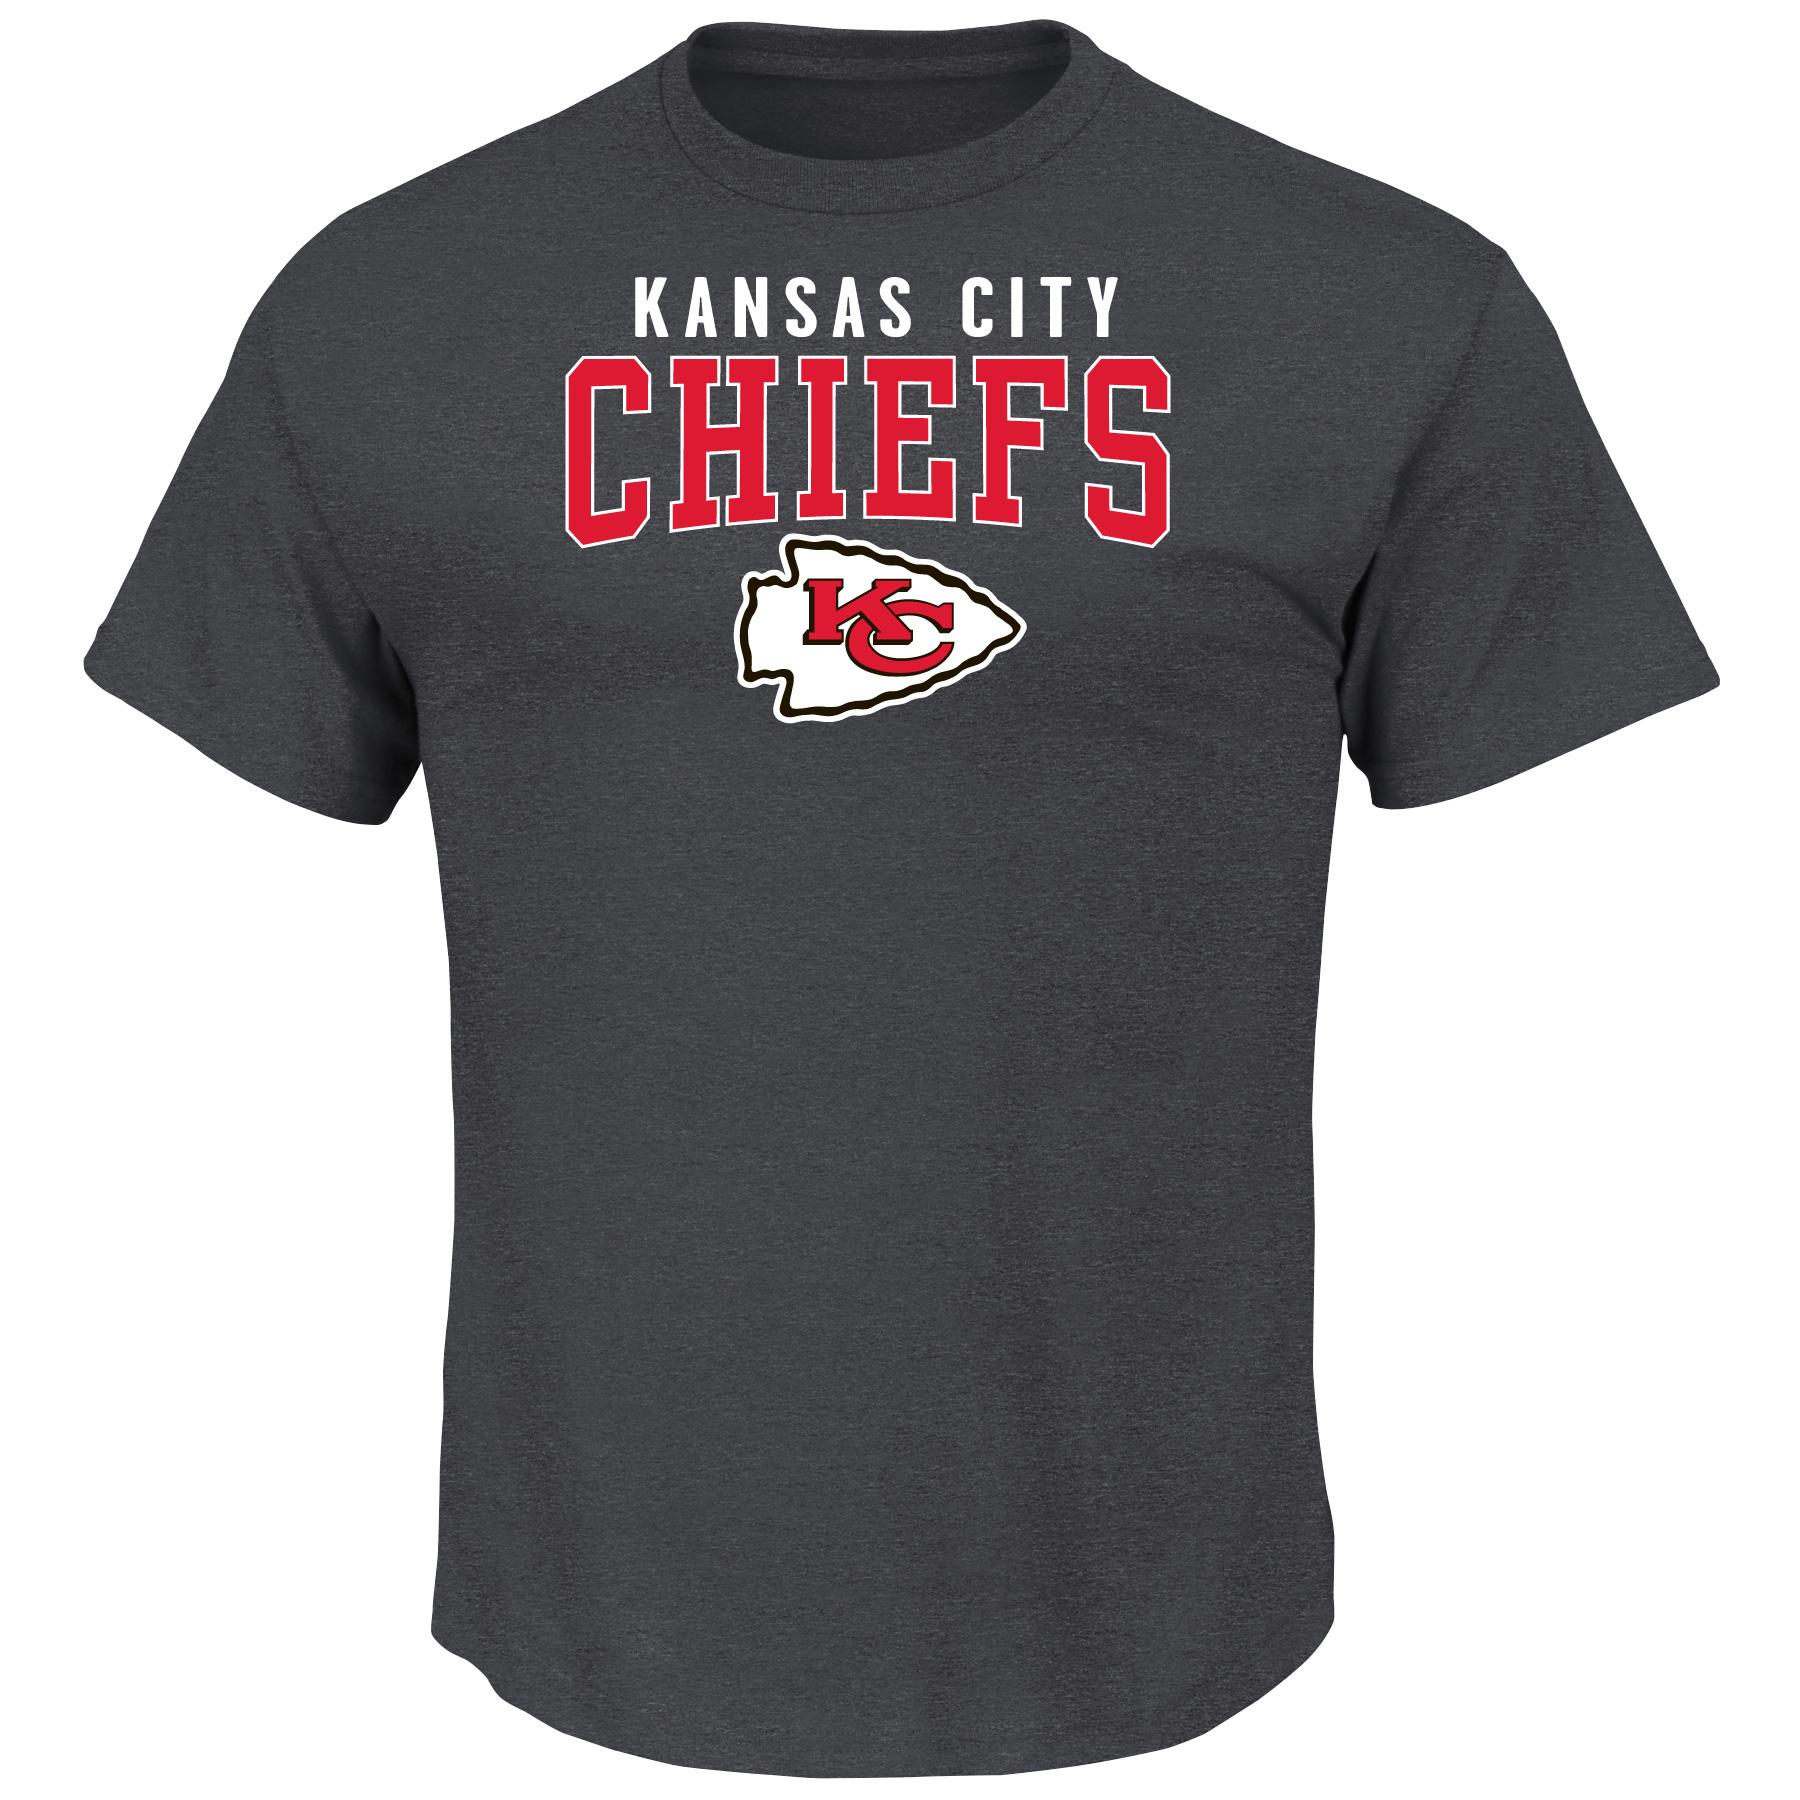 NFL Men's Big & Tall Graphic T-Shirt - Kansas City Chiefs